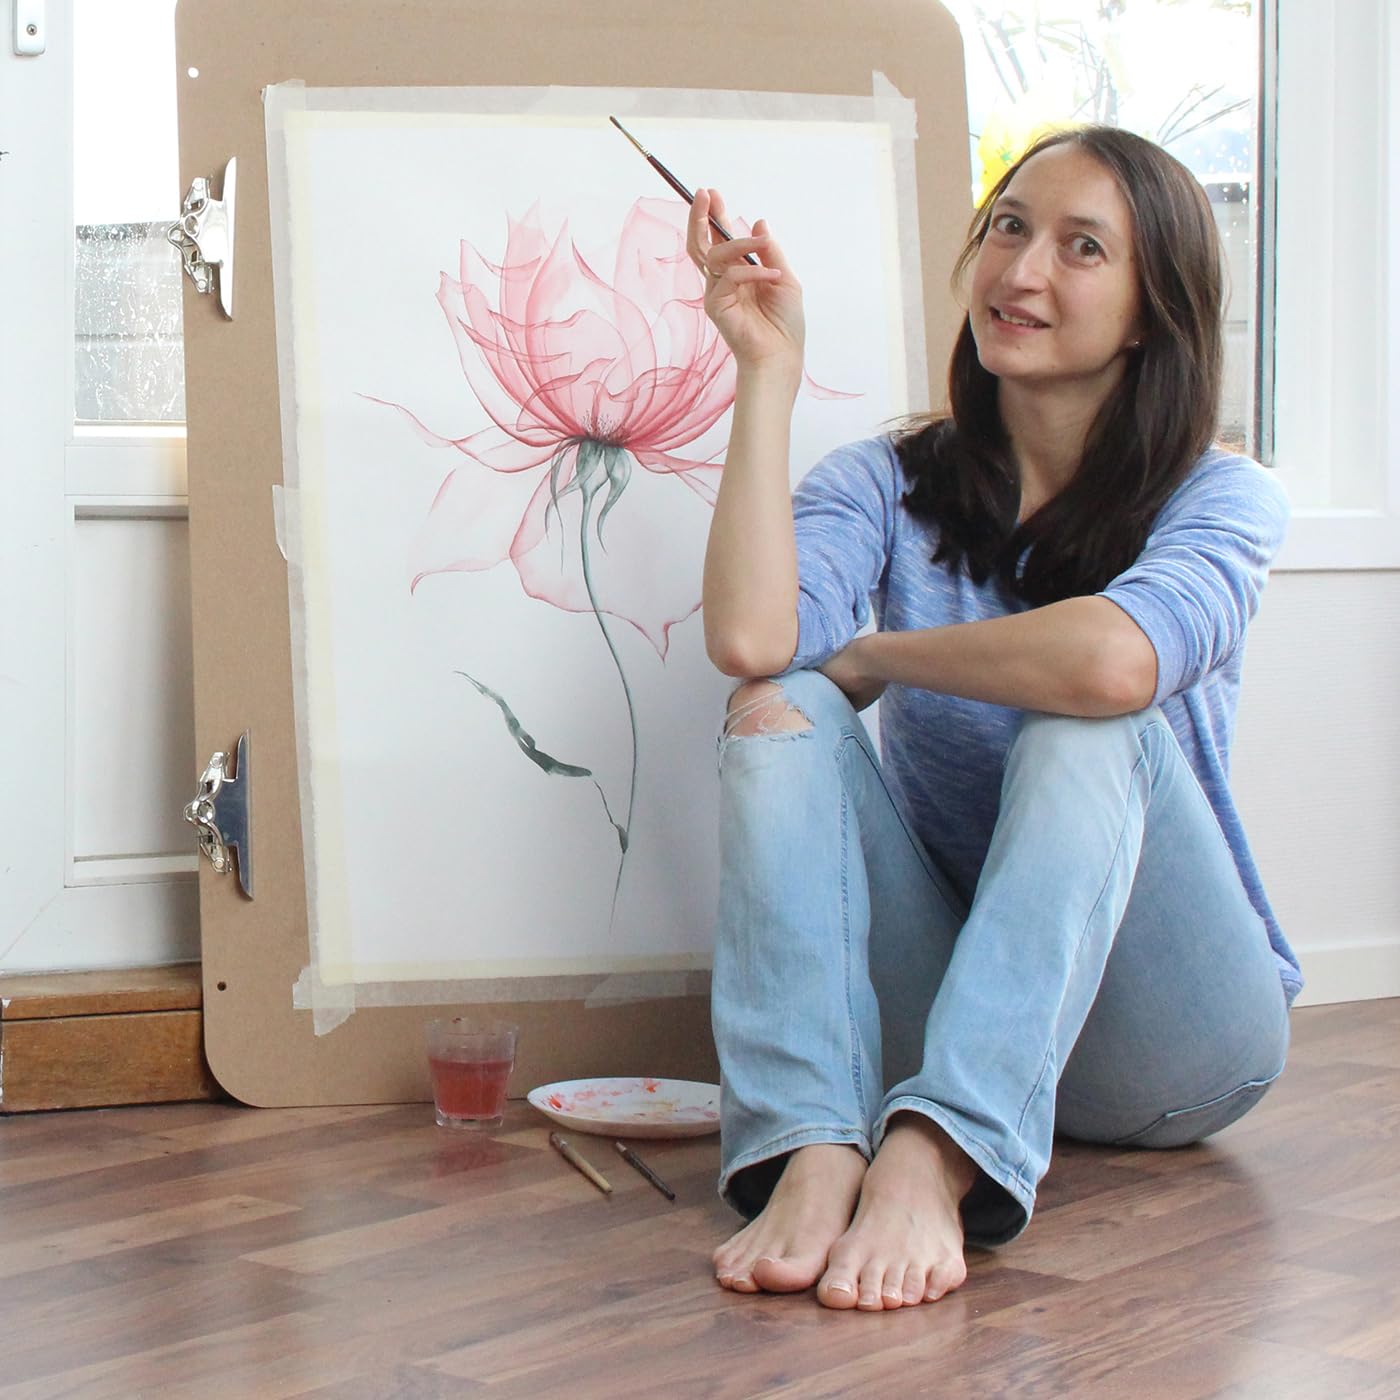 How to Paint Transparent Watercolour Flowers